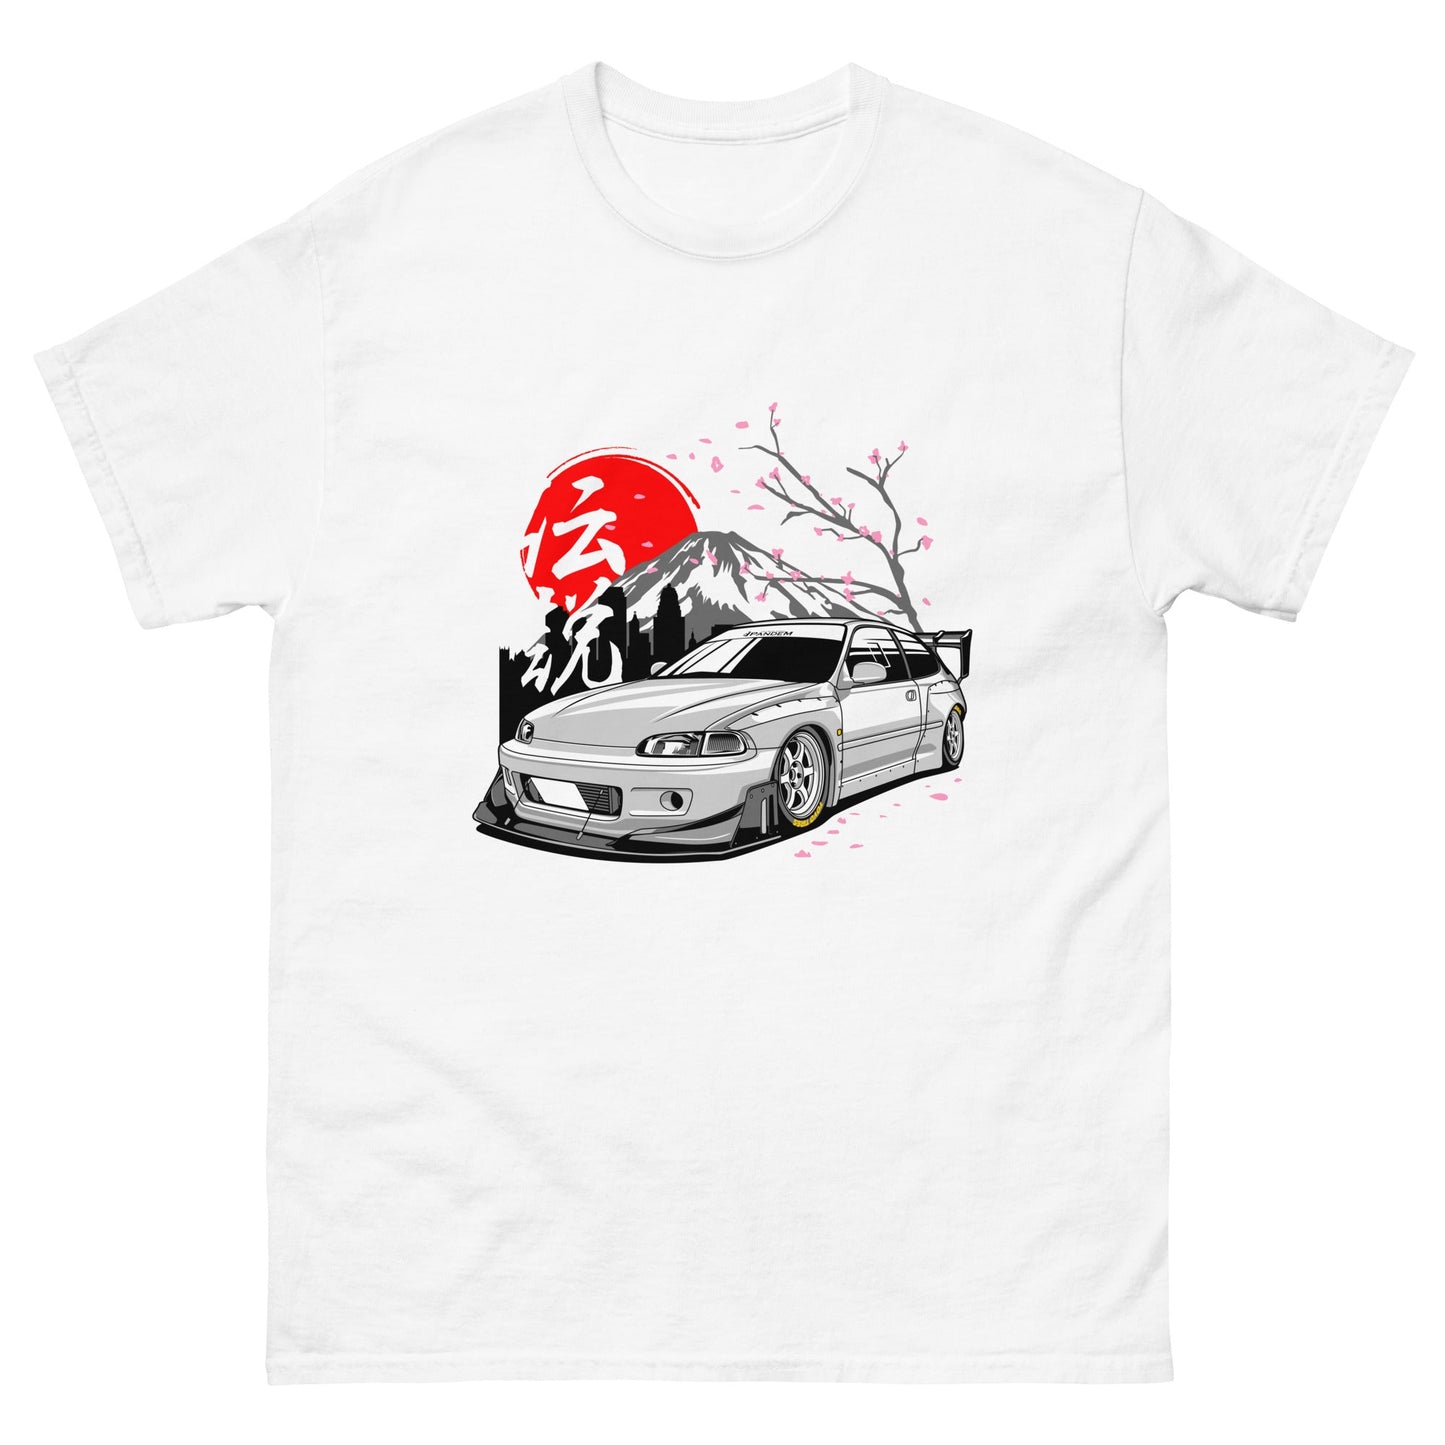 Japan EG6 imported Civic inspired t-shirt - ShopKiamond